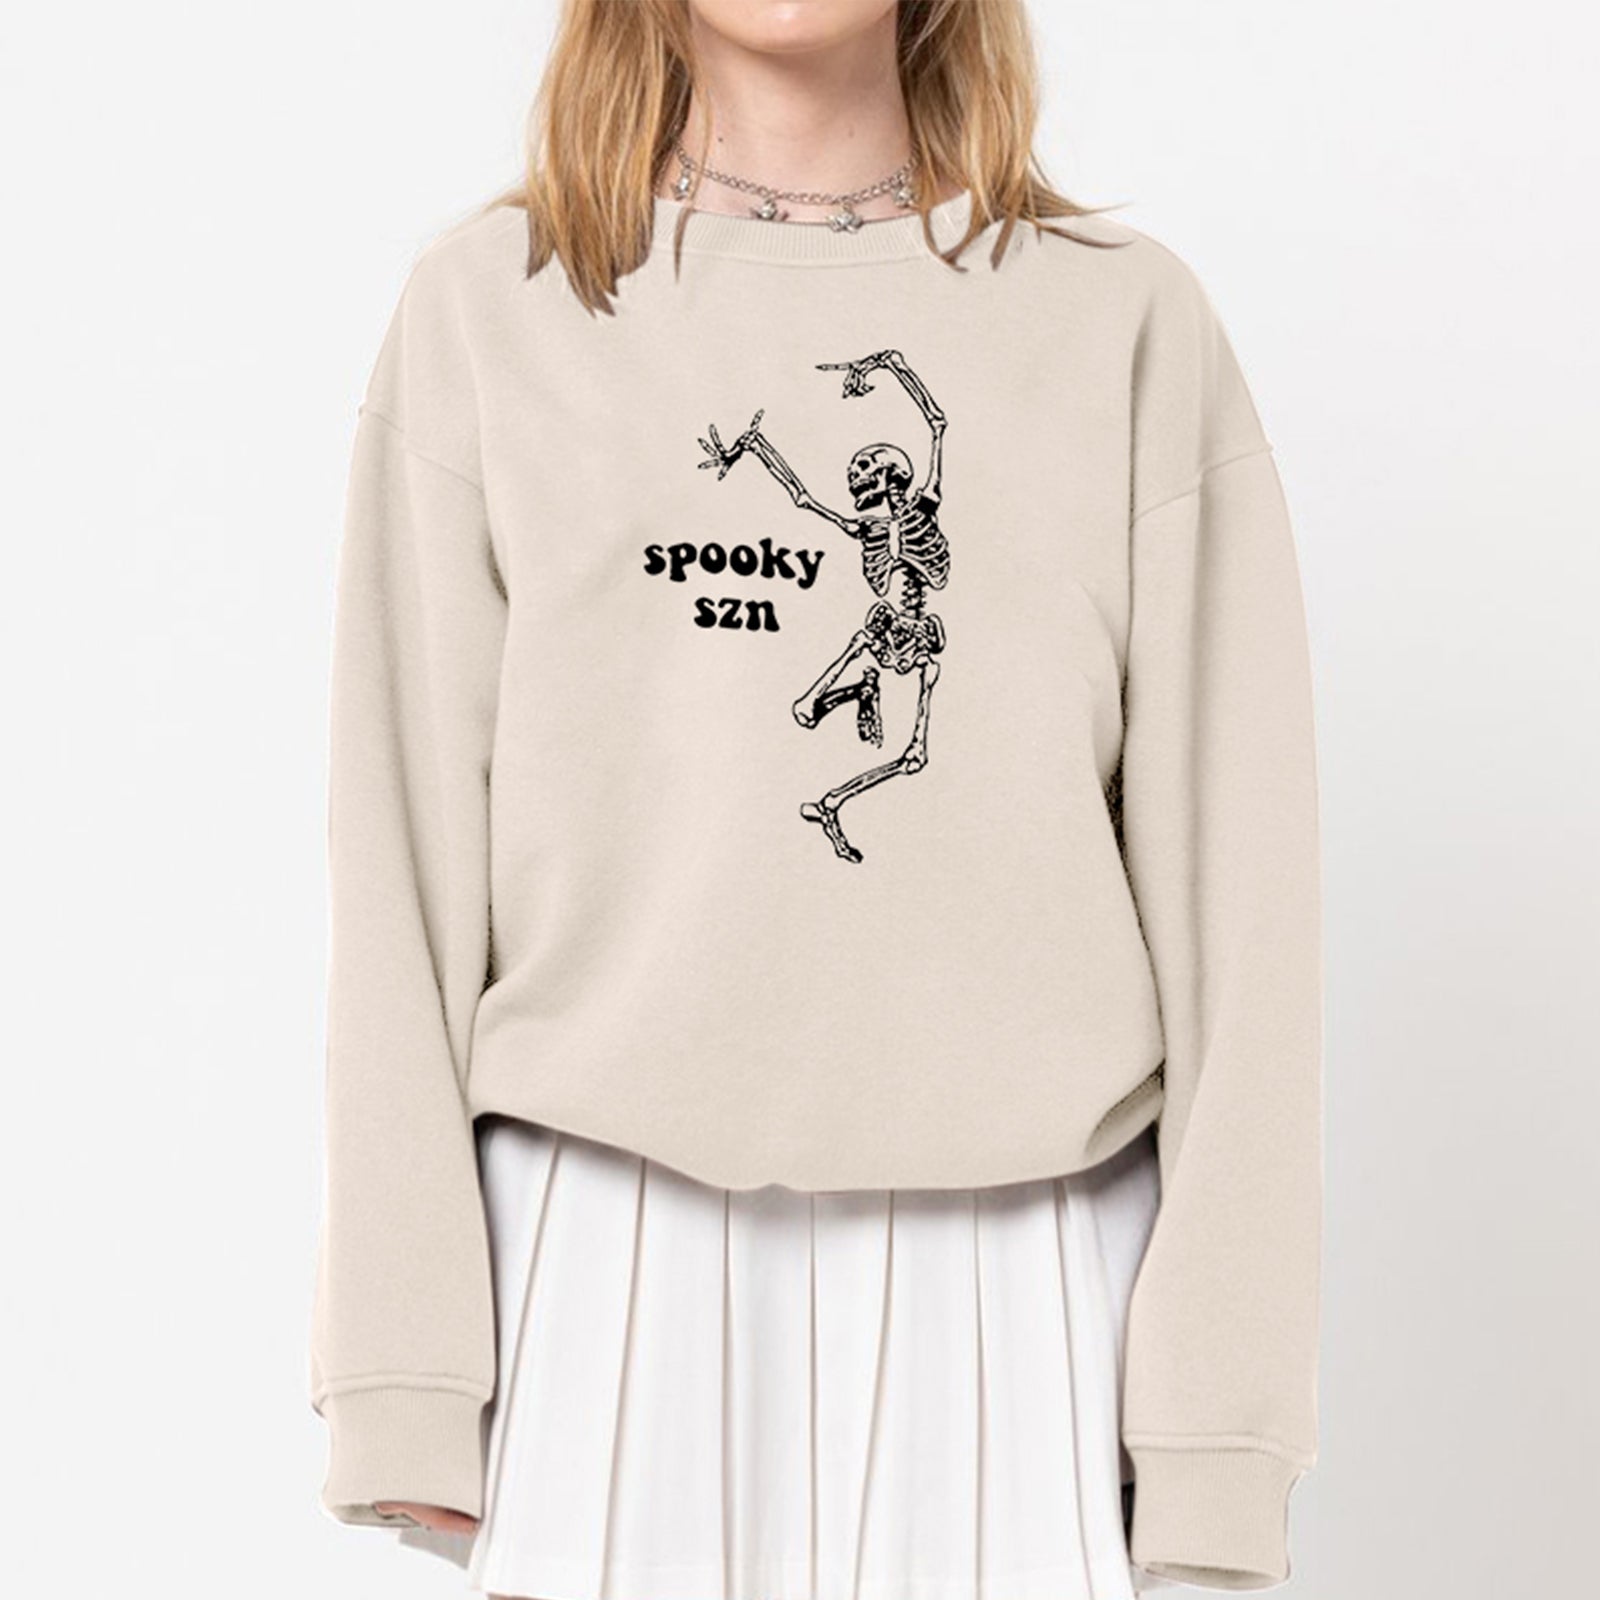 Minnieskull Cool Spooky Szn Skeleton Printed Fashion Sweatshirt - chicyea